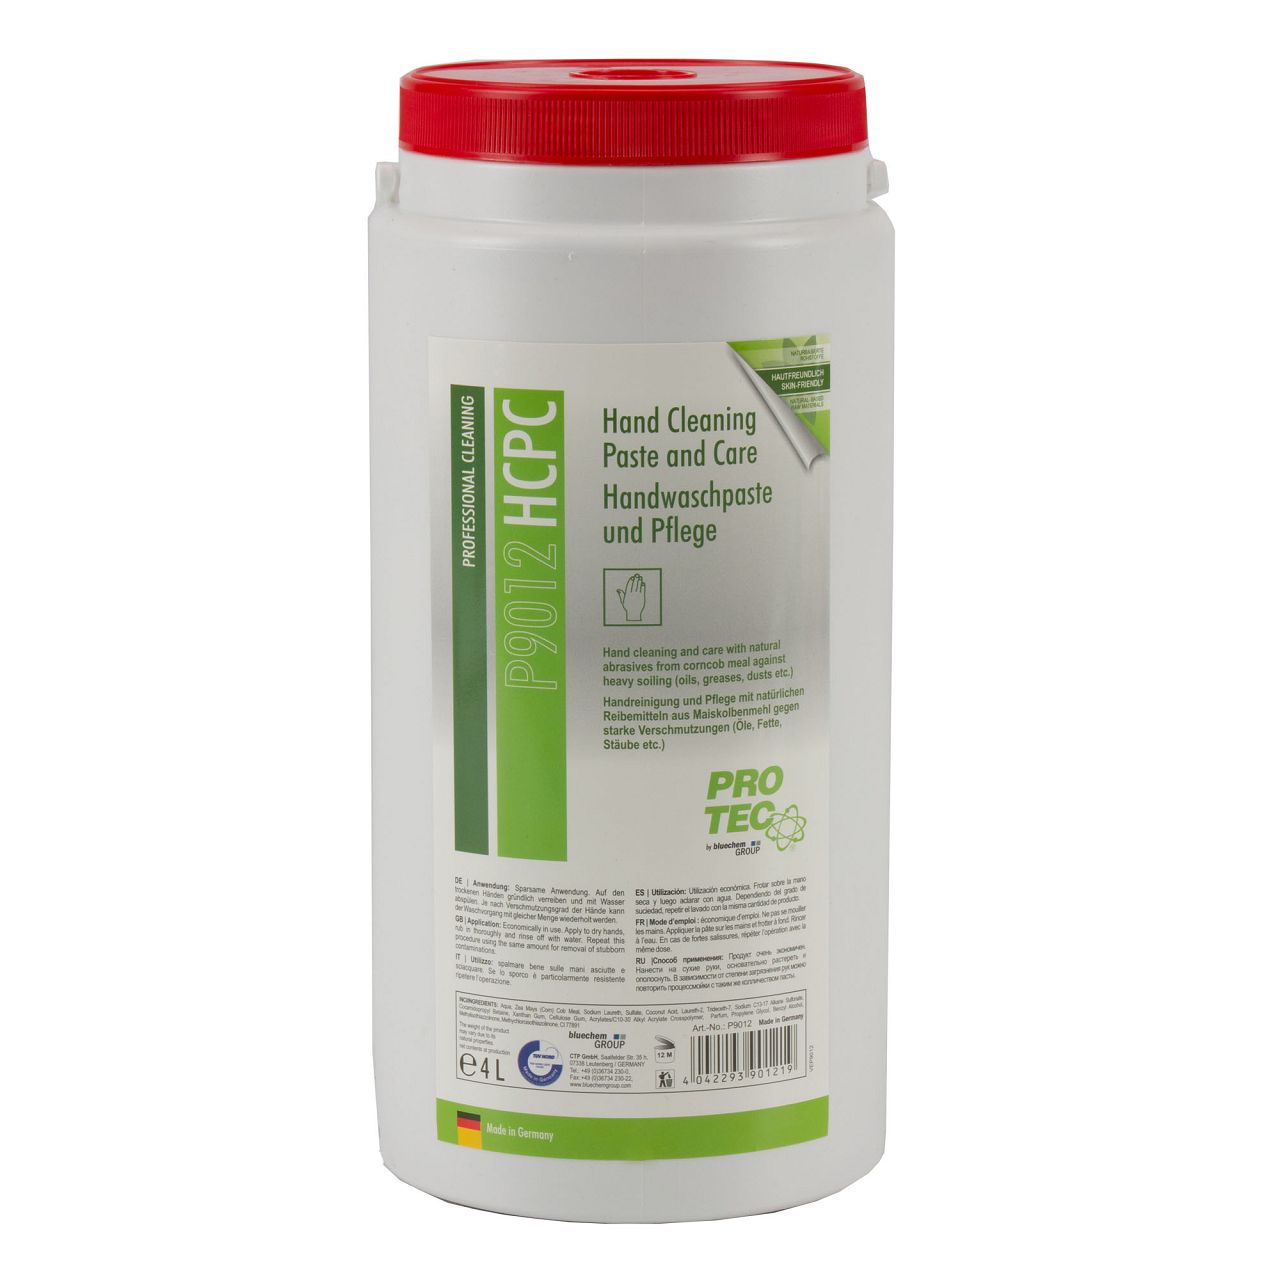 8 Liter PROTEC P9012 HCPC Hand Cleaning Paste and Care Handwaschpaste und Pflege